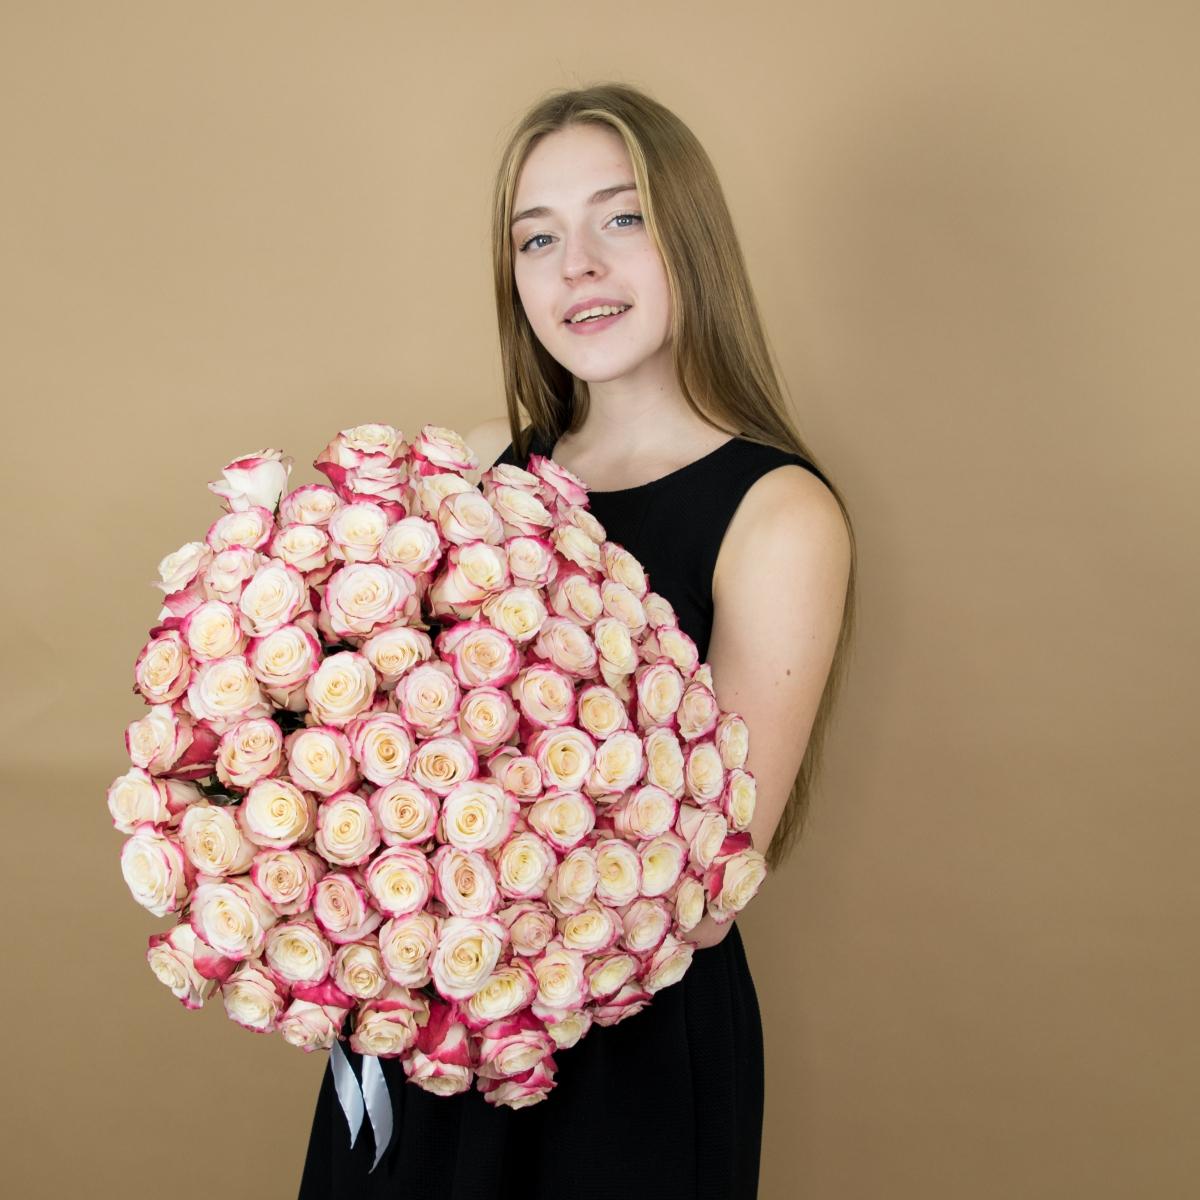 Розы красно-белые (40 см) Эквадор артикул букета: 477